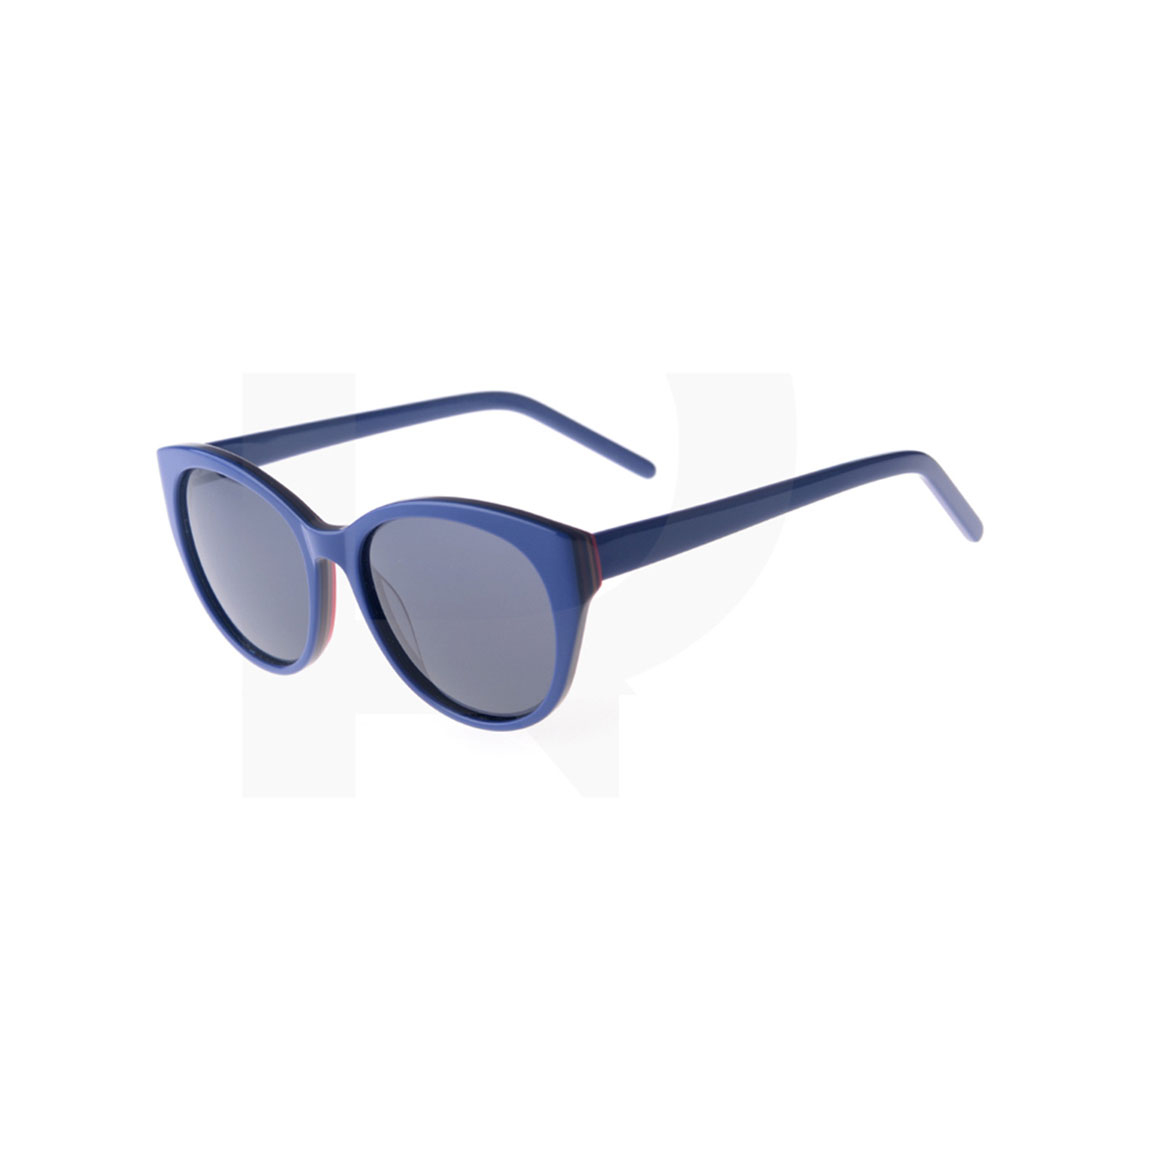 Round Frame Acetate Sunglasses 2020